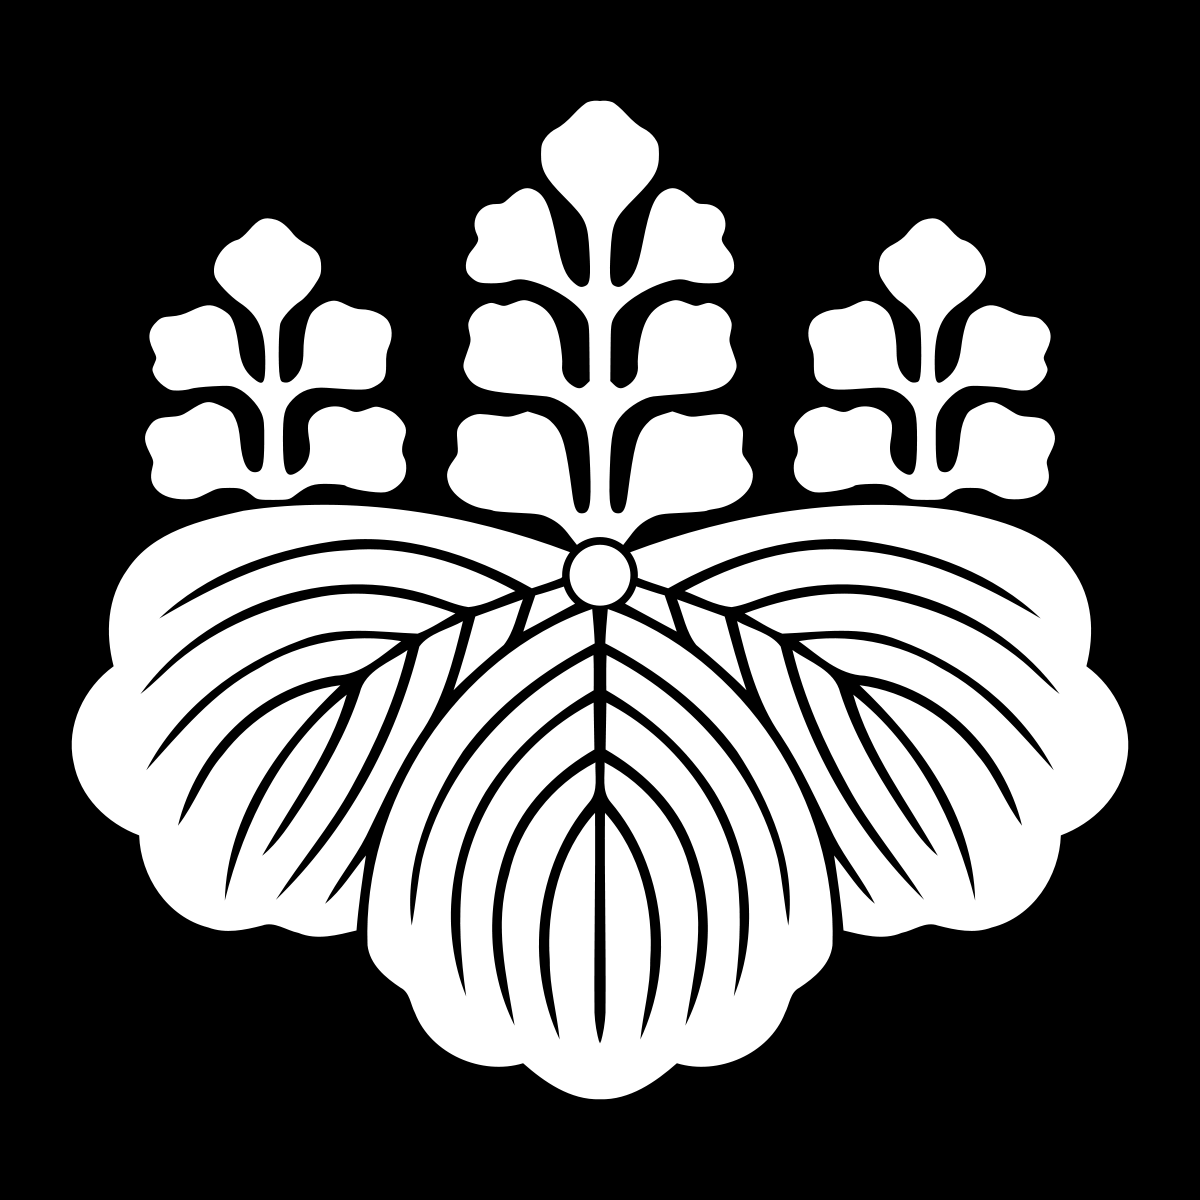 Mon (emblem) - Wikipedia